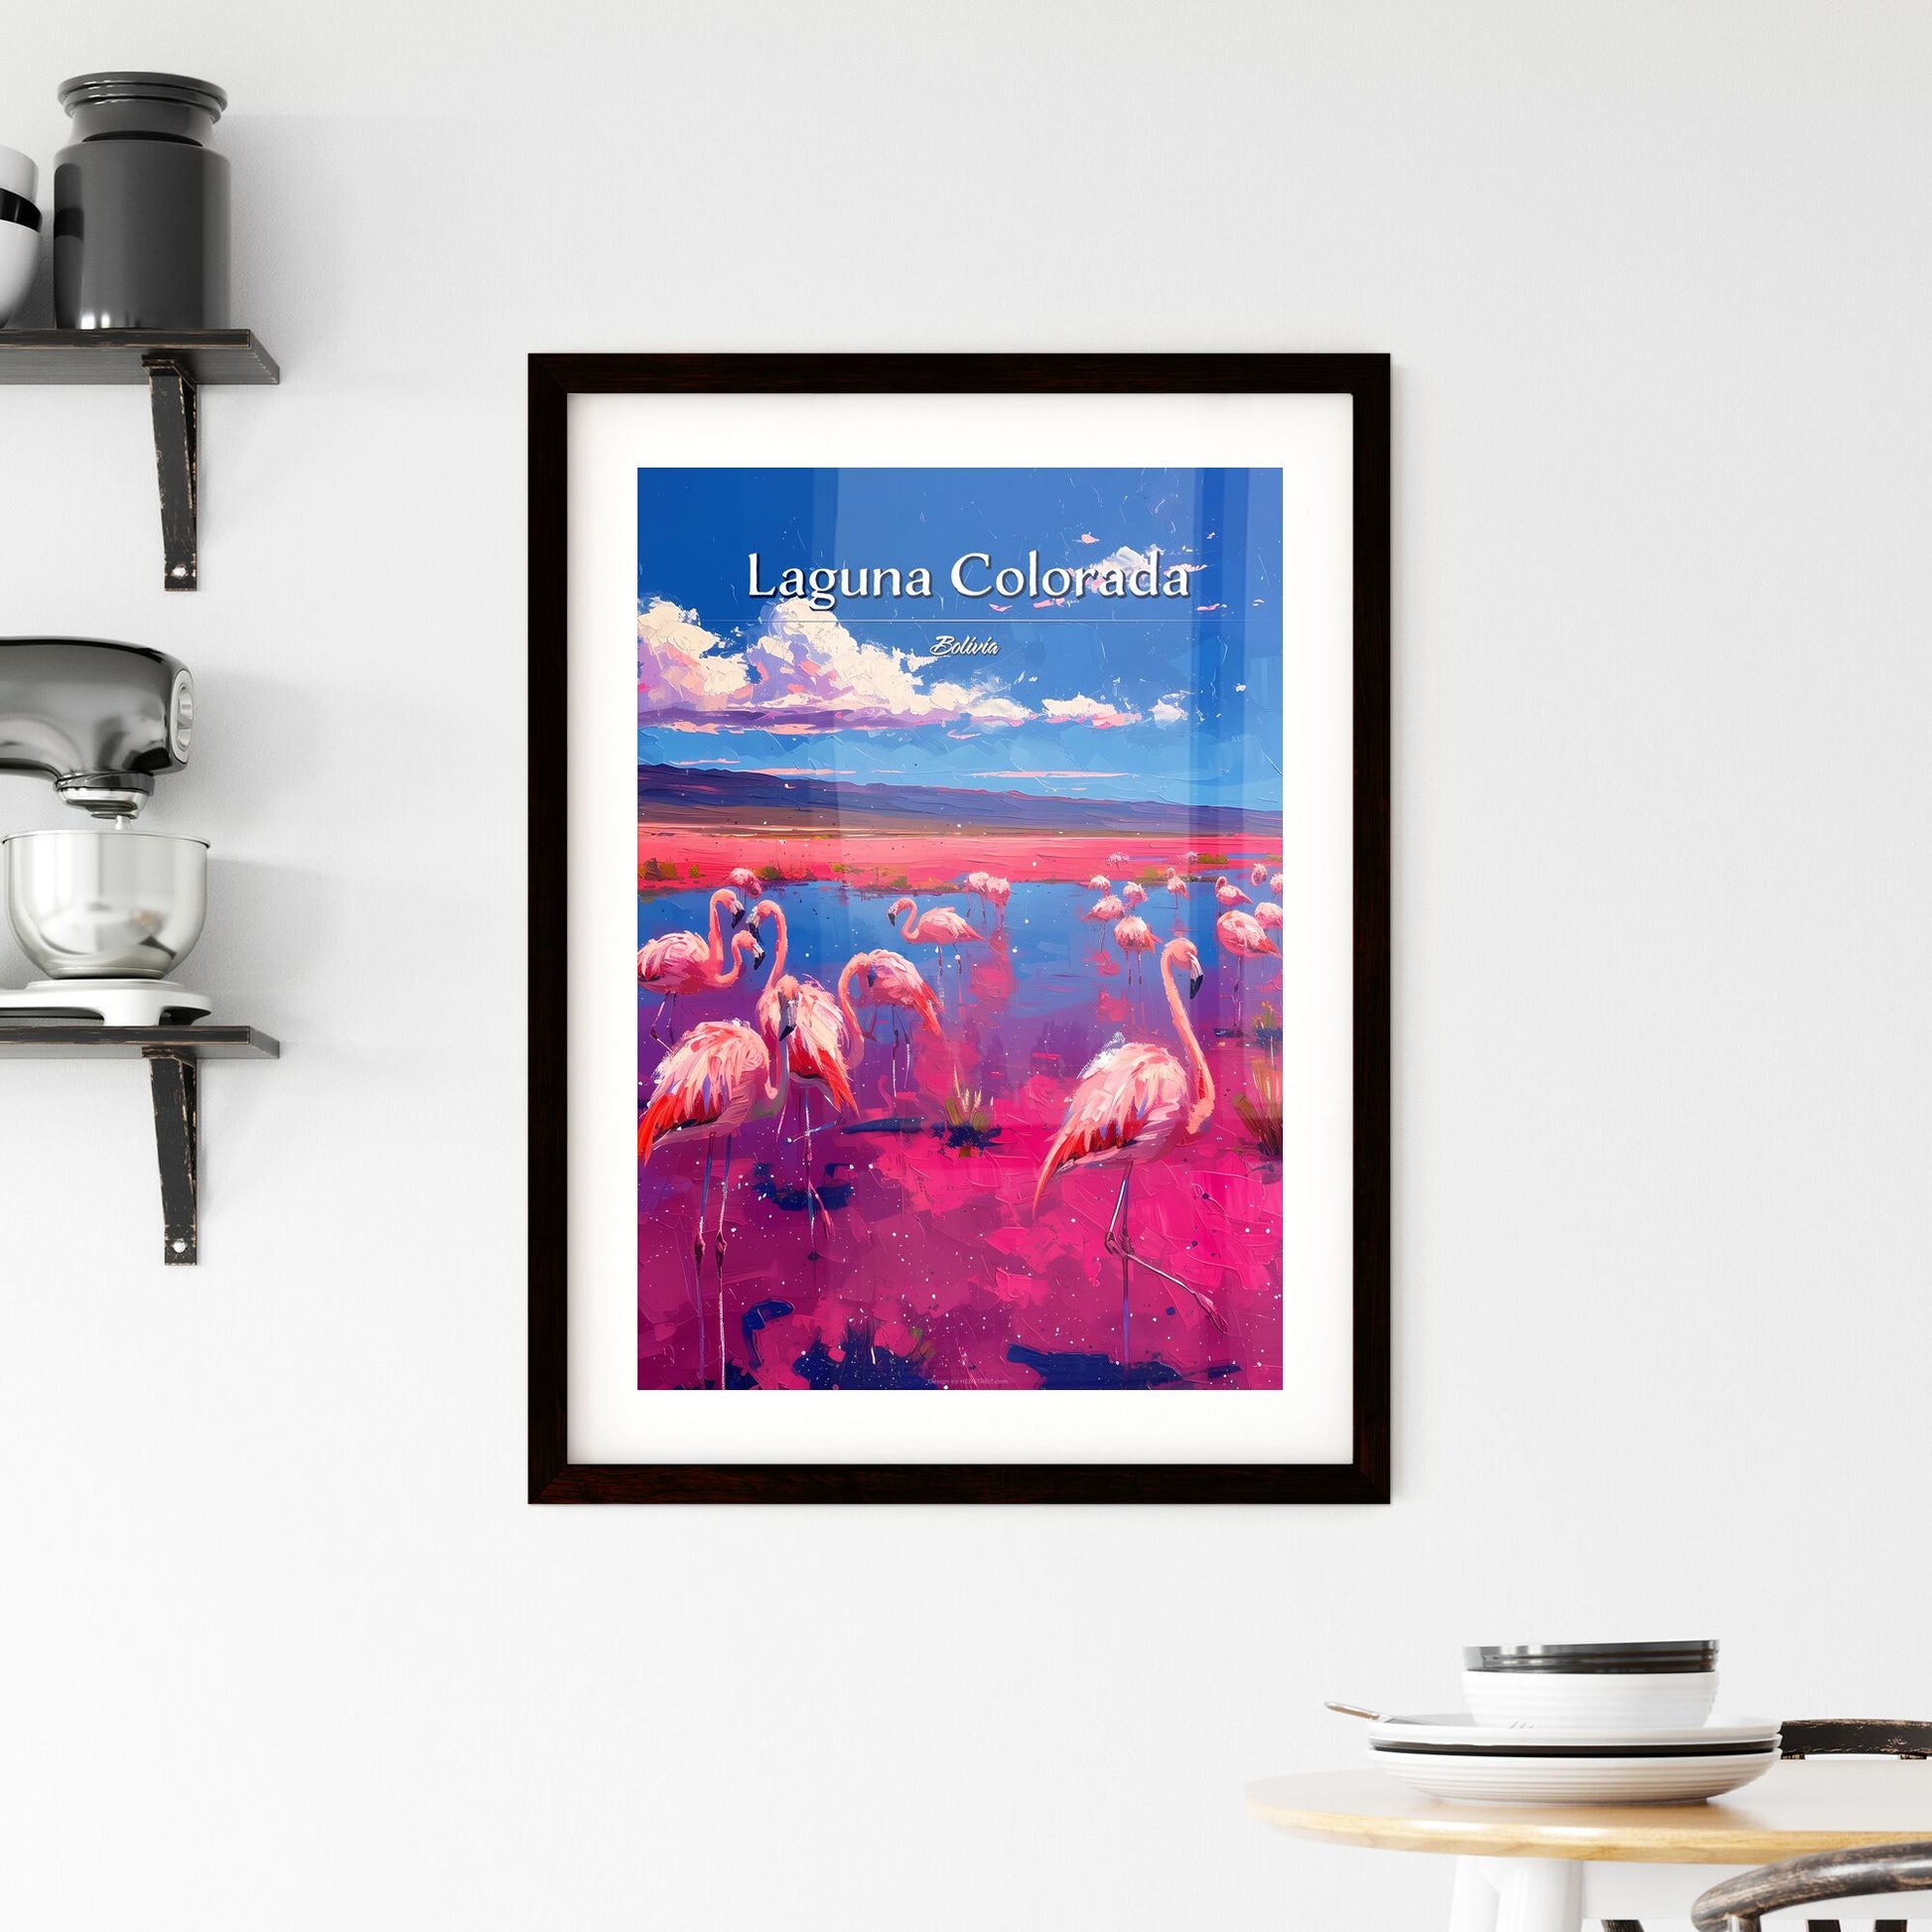 Laguna Colorada, Bolivia - Art print of a group of flamingos in a pink lake Default Title